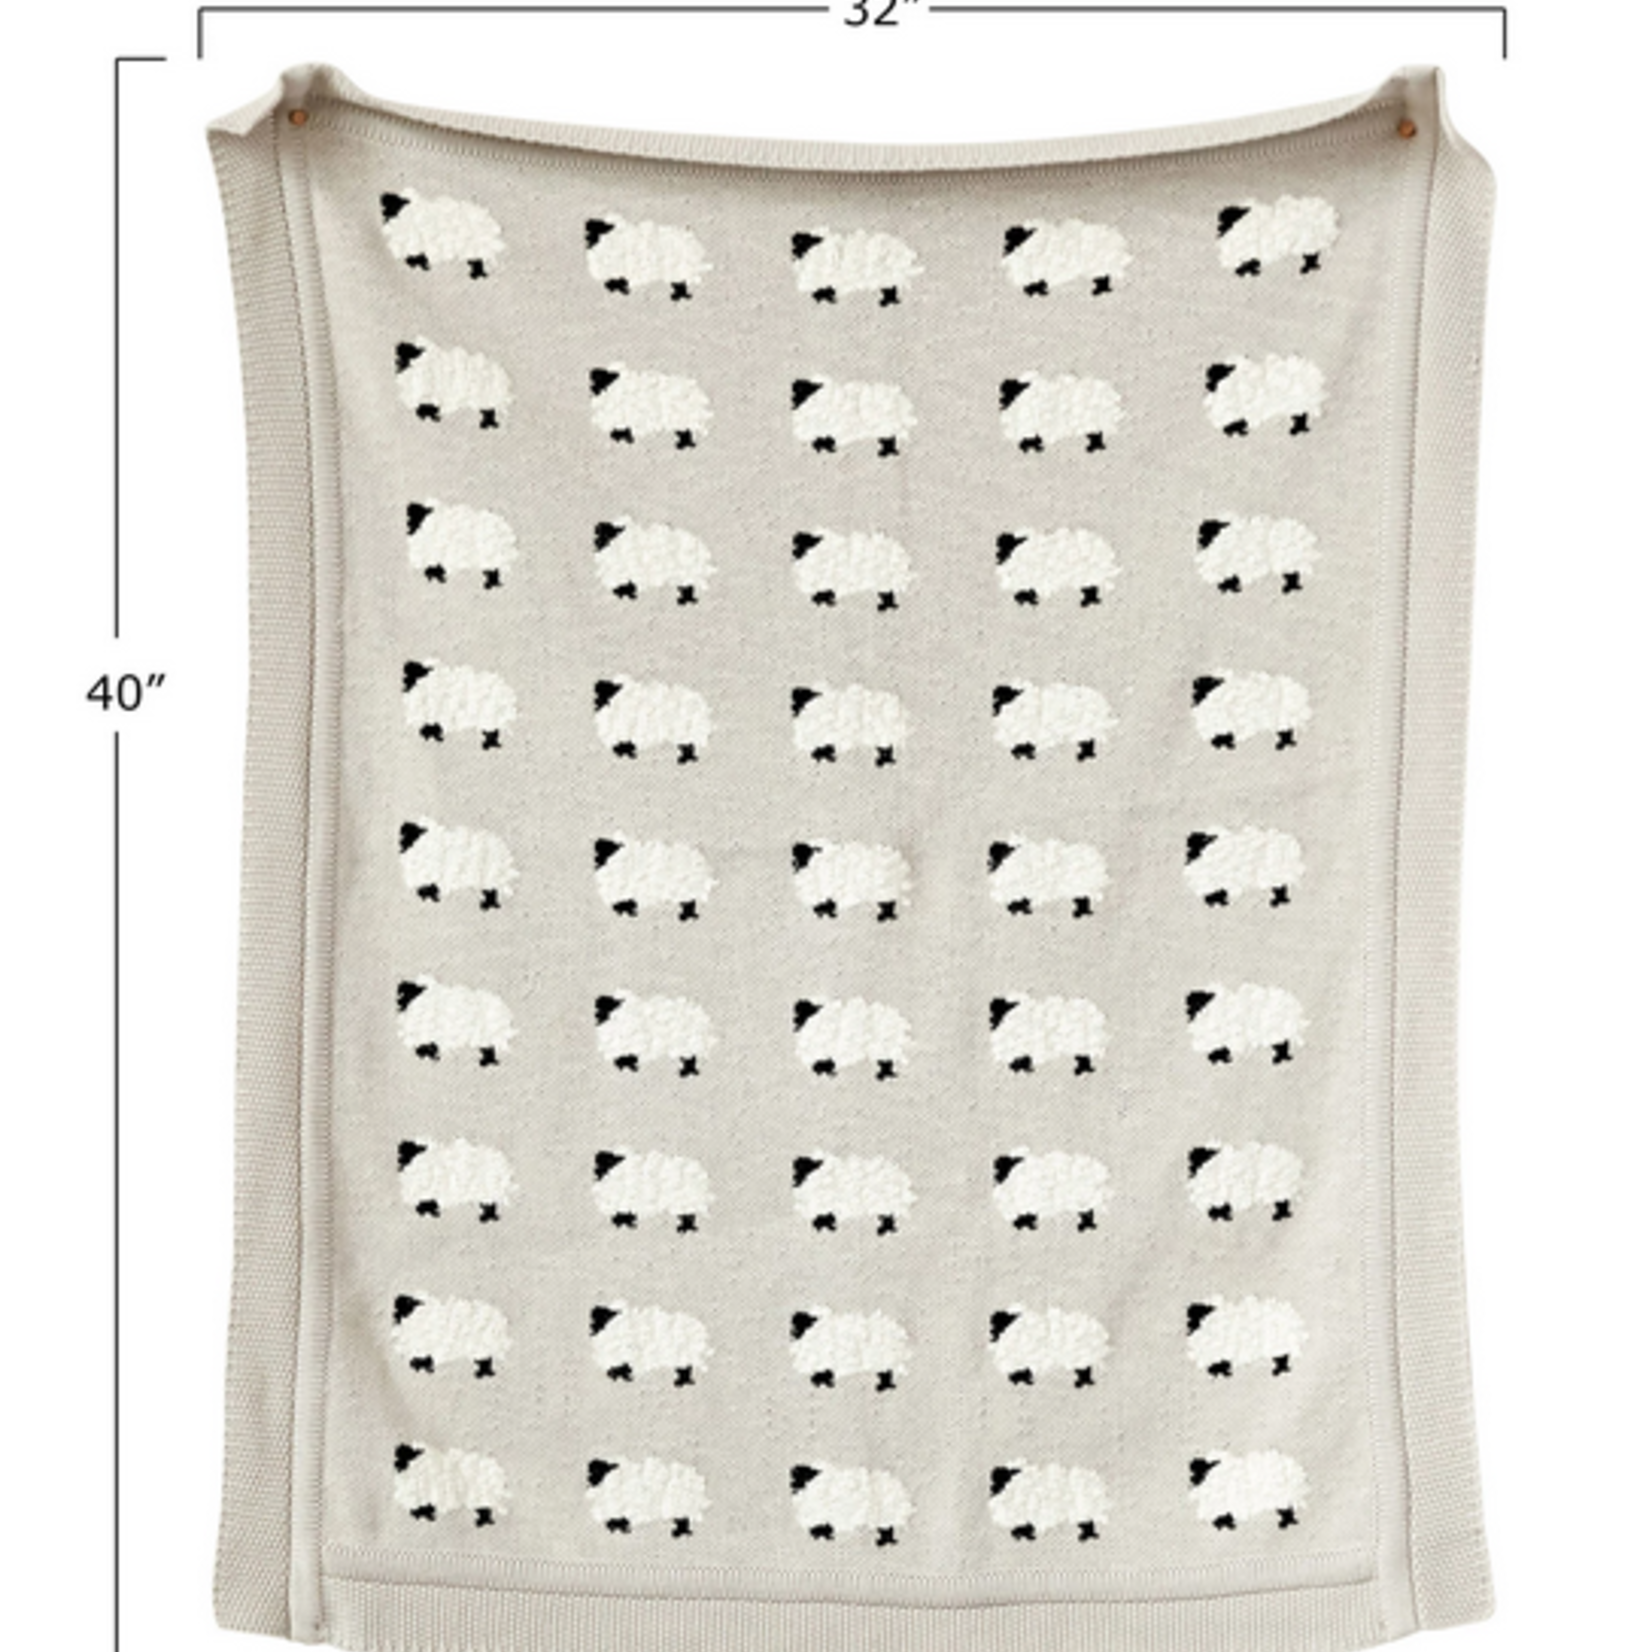 Creative Co-Op Cotton Knit Blanket w Sheep, Gray